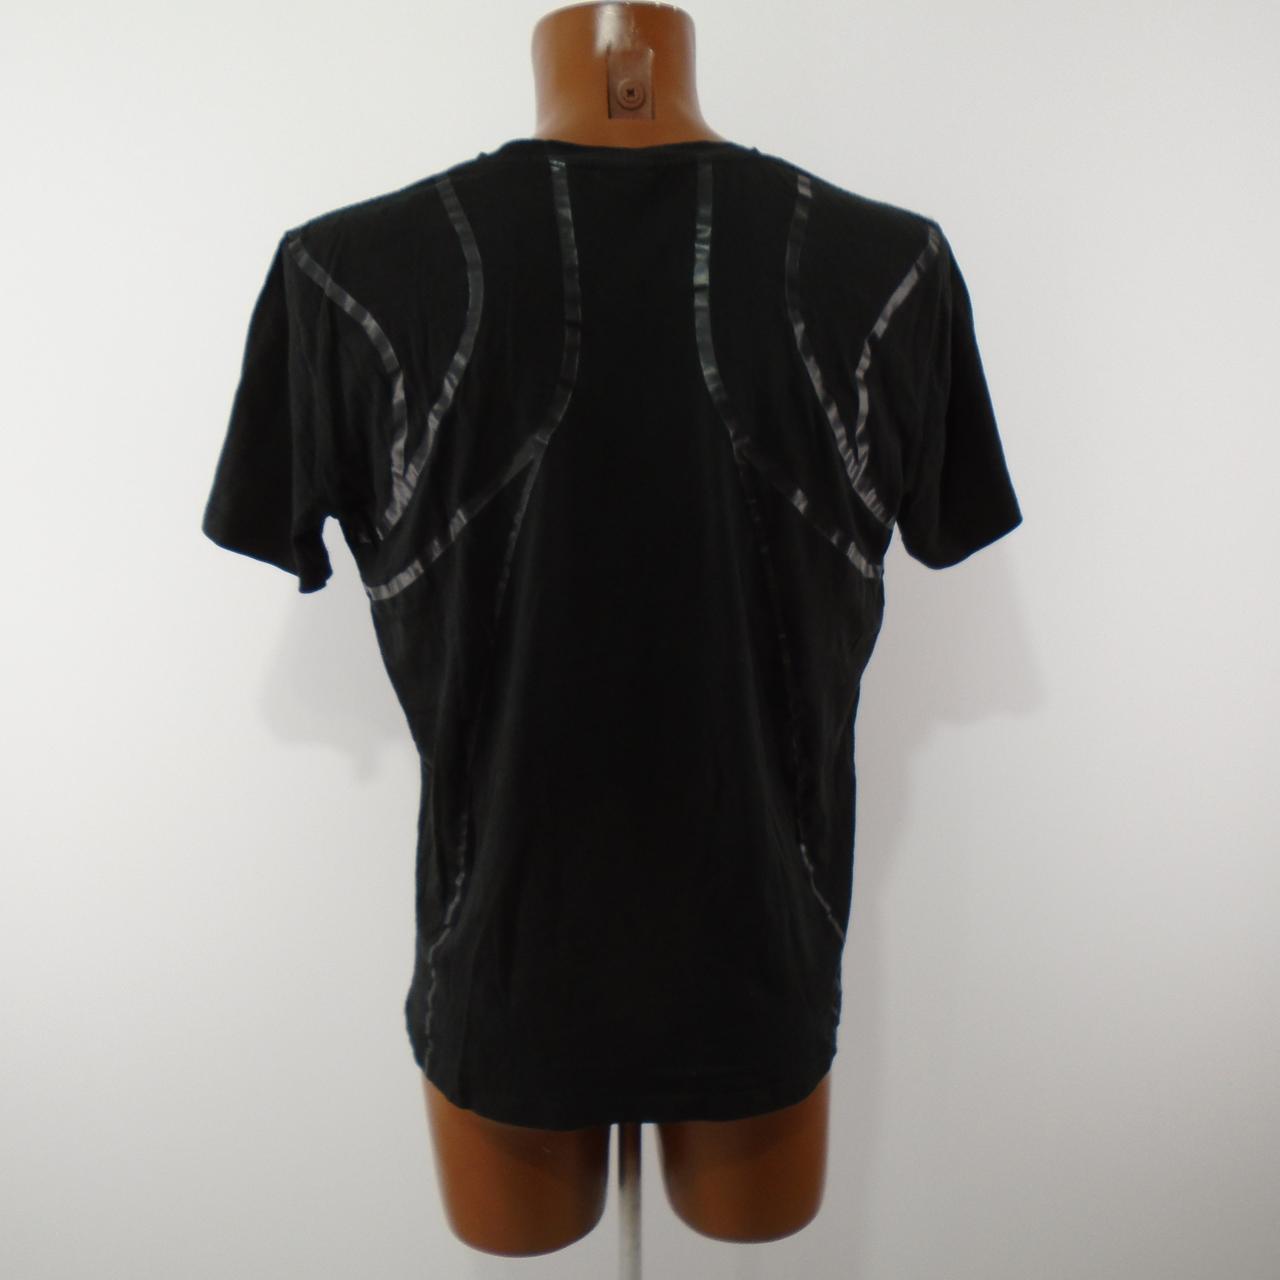 Men's T-Shirt Puma. Black. L. Used. Good